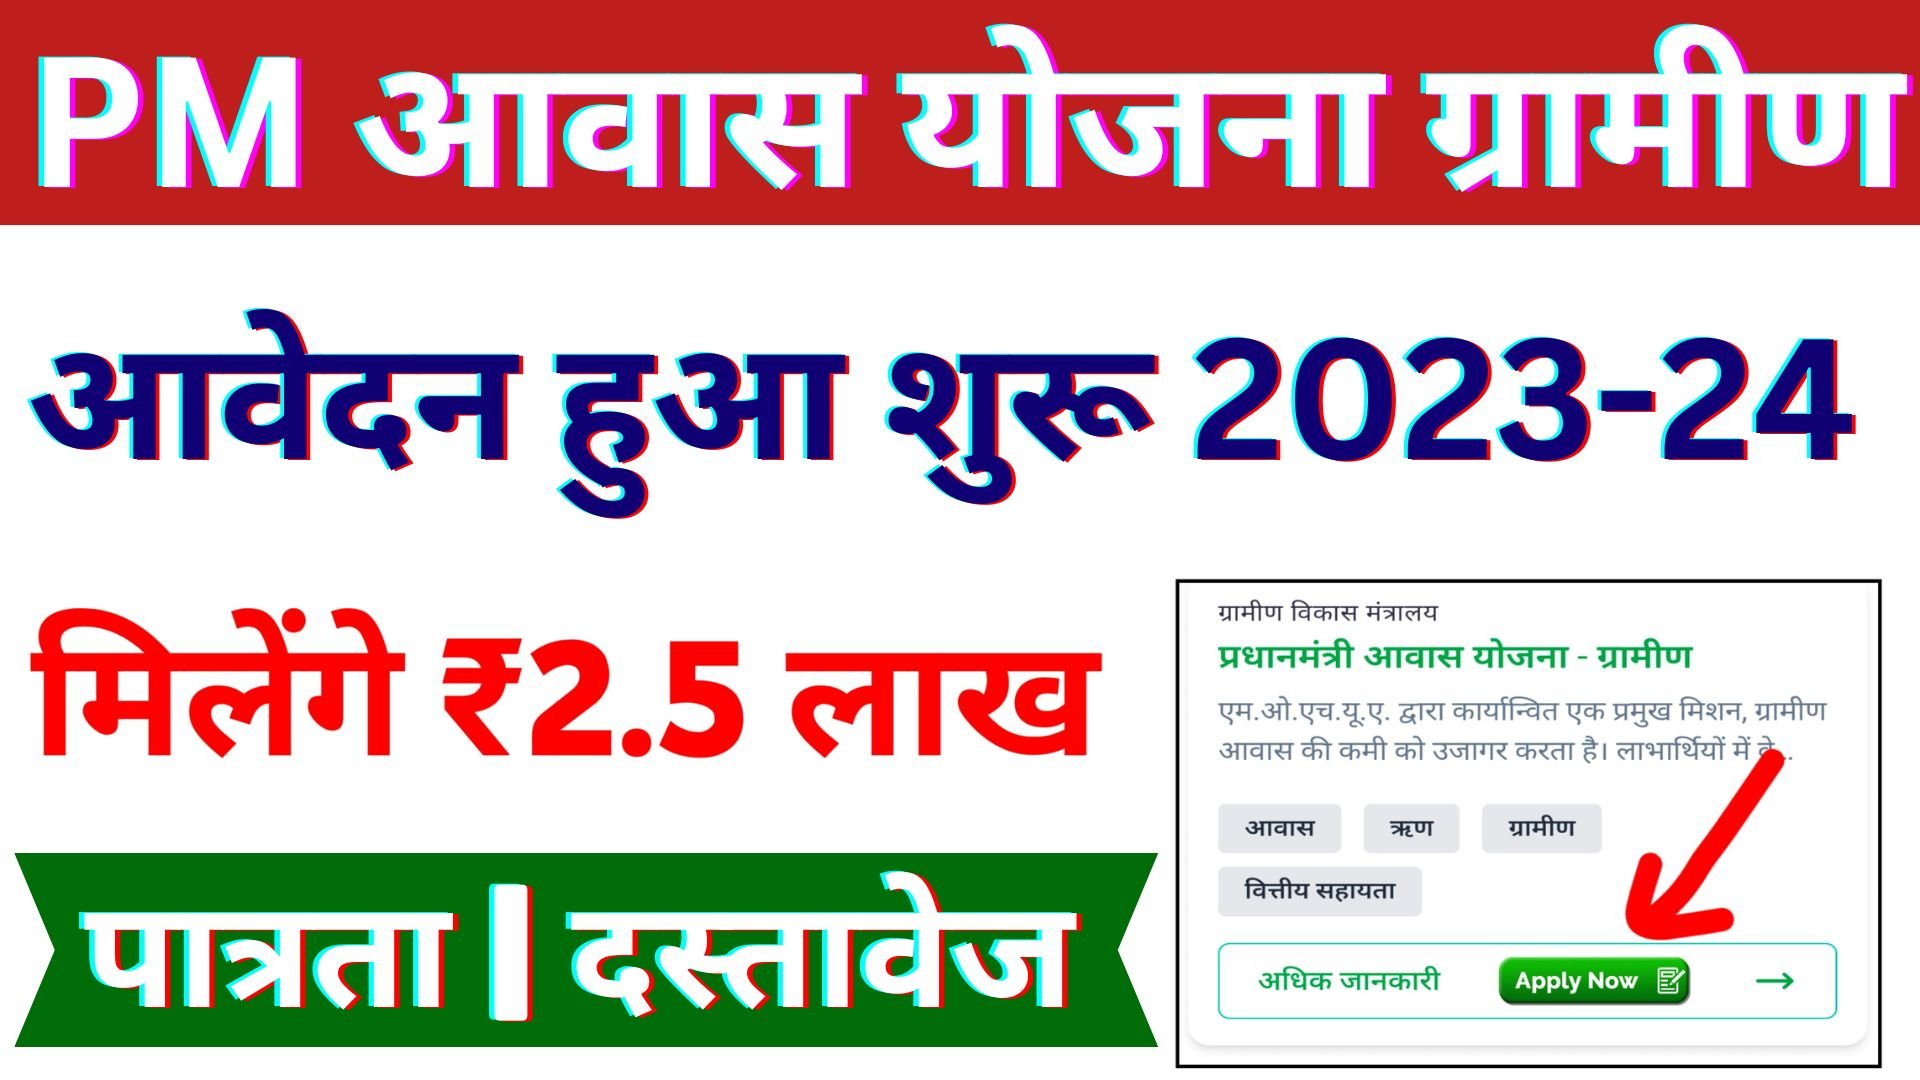 PM Aawas Yojana Gramin Apply Online 2023-24 | PM Aawas Yojana Apply Kaise Kare | PM Aawas Yojana Gramin